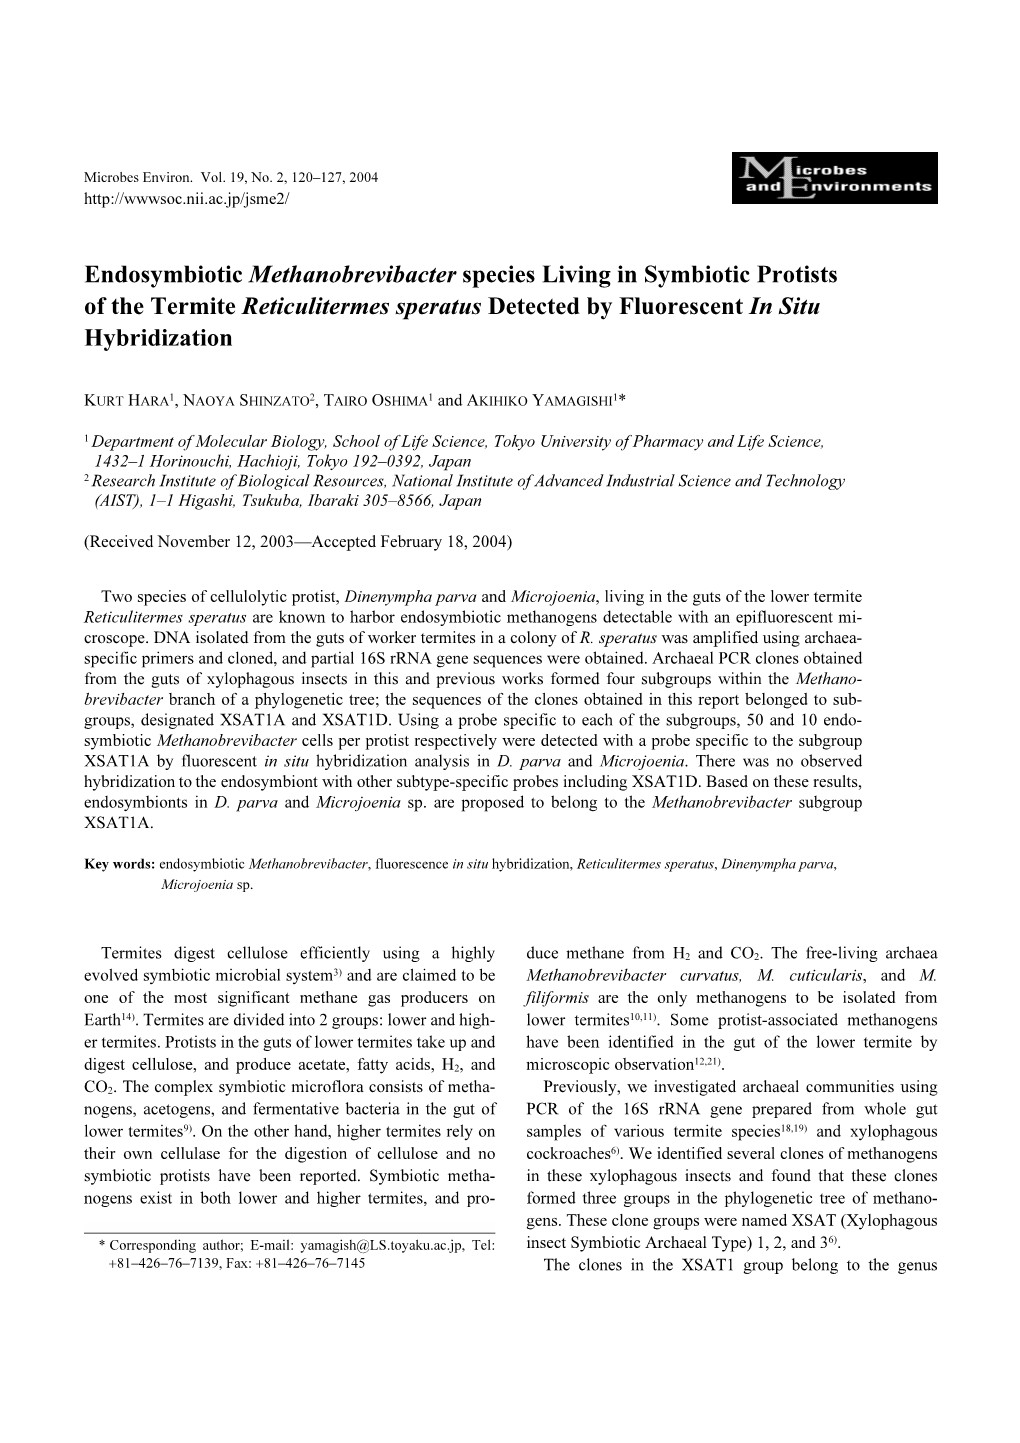 Endosymbiotic Methanobrevibacter Species Living in Symbiotic Protists of the Termite Reticulitermes Speratus Detected by Fluorescent in Situ Hybridization